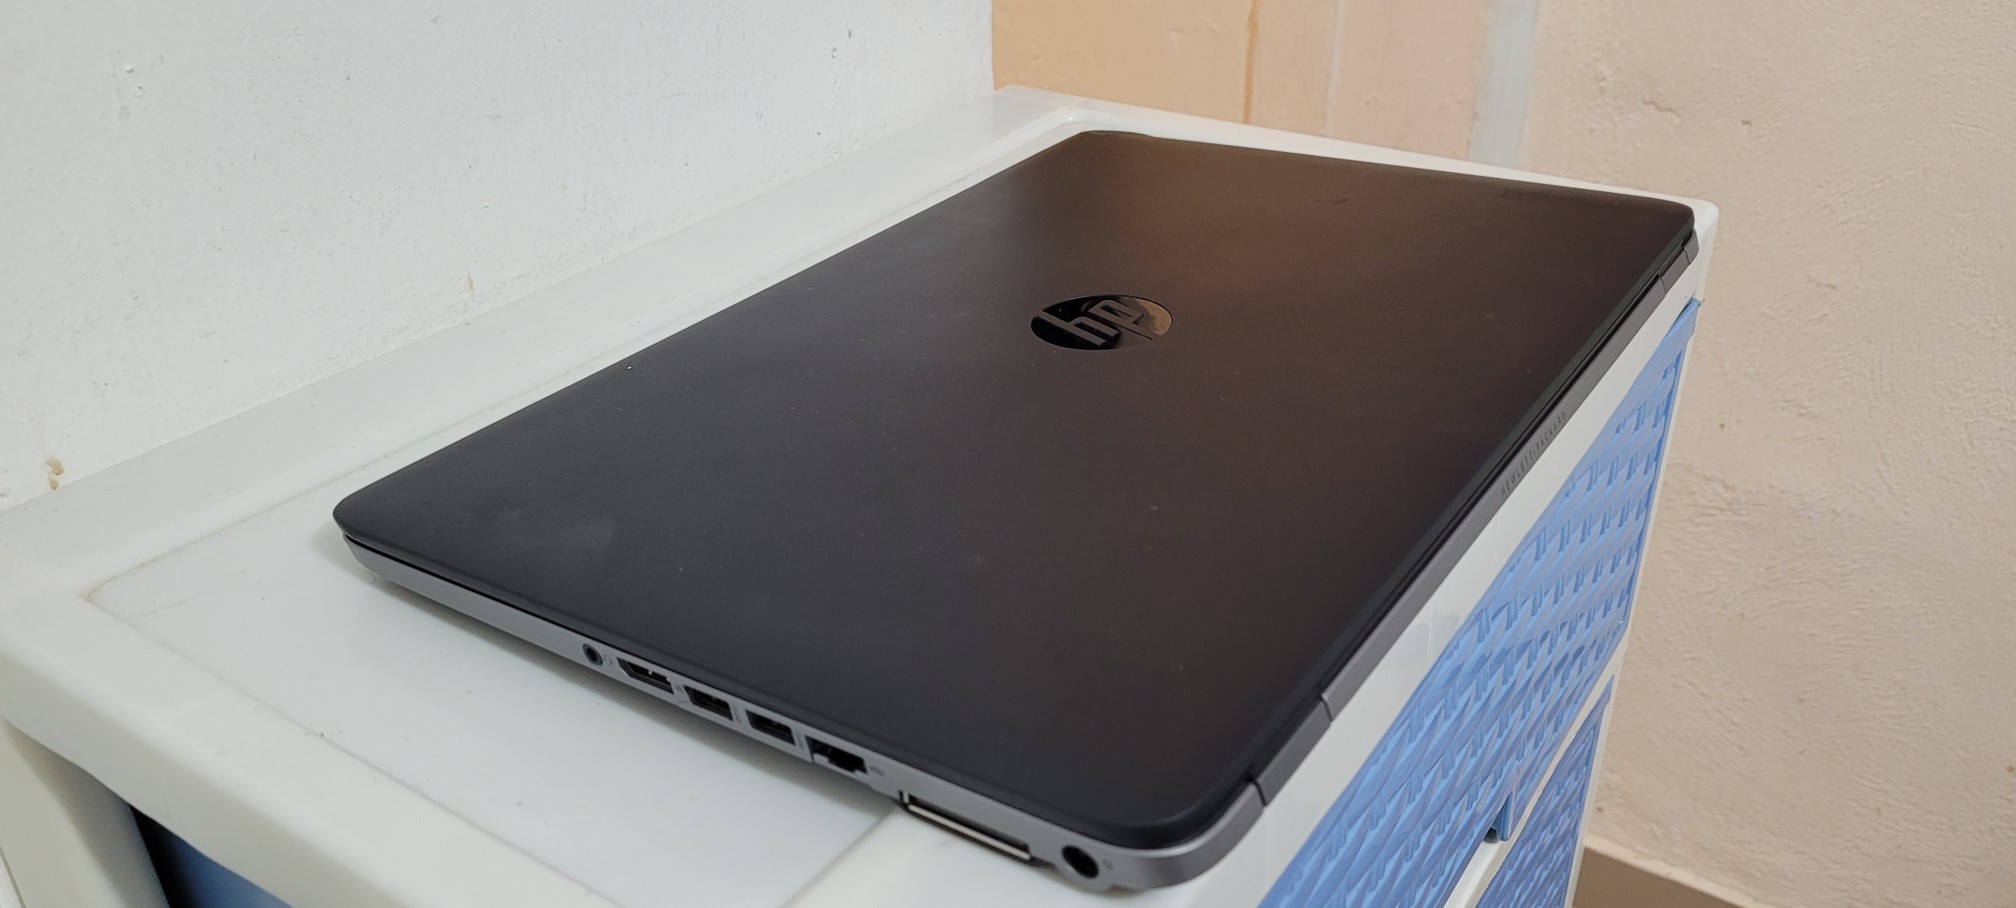 computadoras y laptops - laptop hp Elitebook 17 Pulg Core i7 Ram 16gb Disco SSD 512GB Video 8gb 2